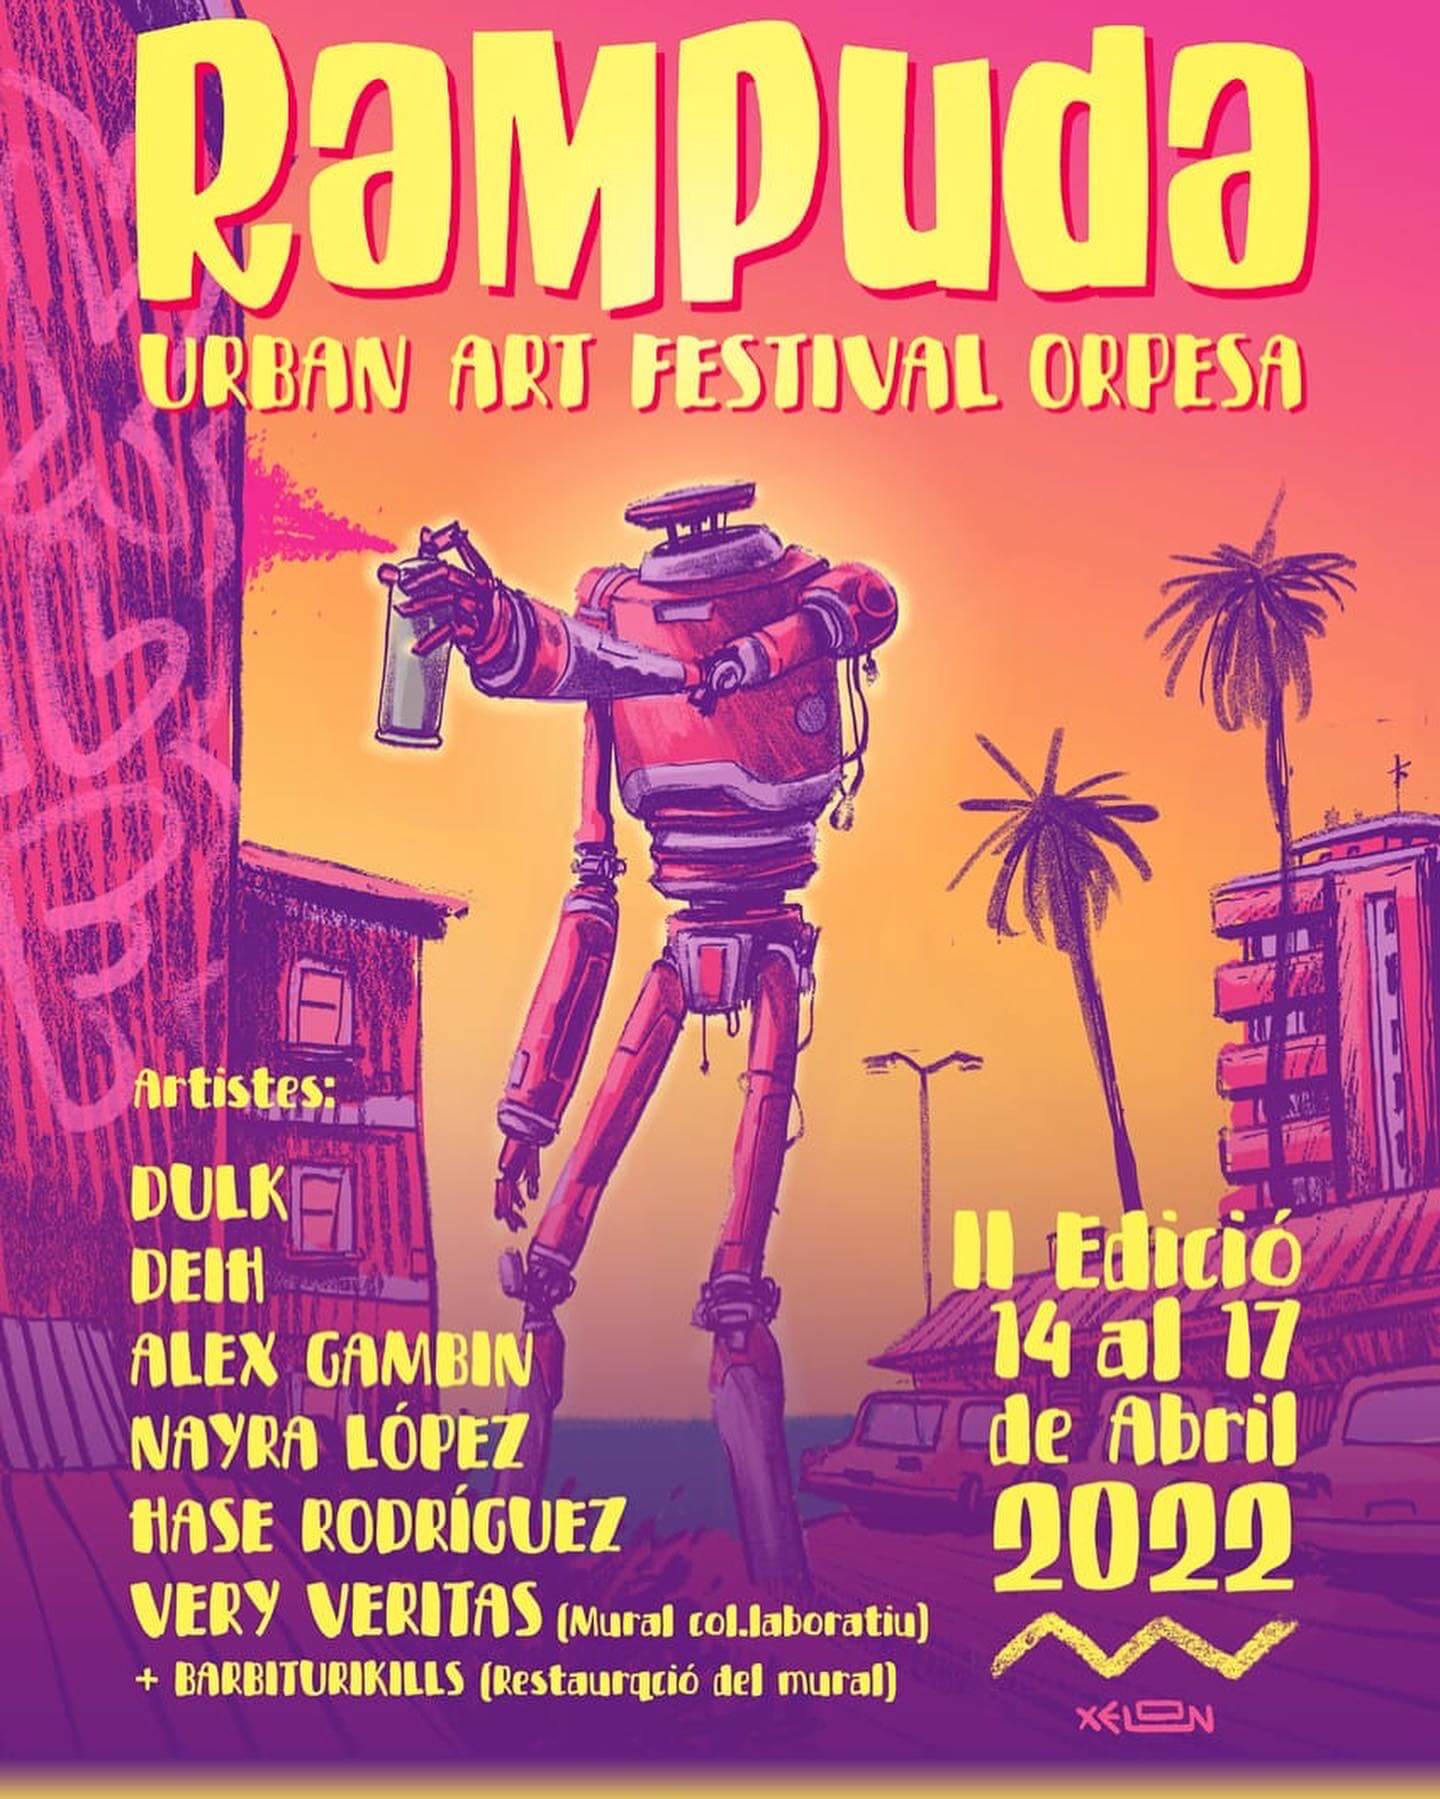 Rampuda Festival 2022